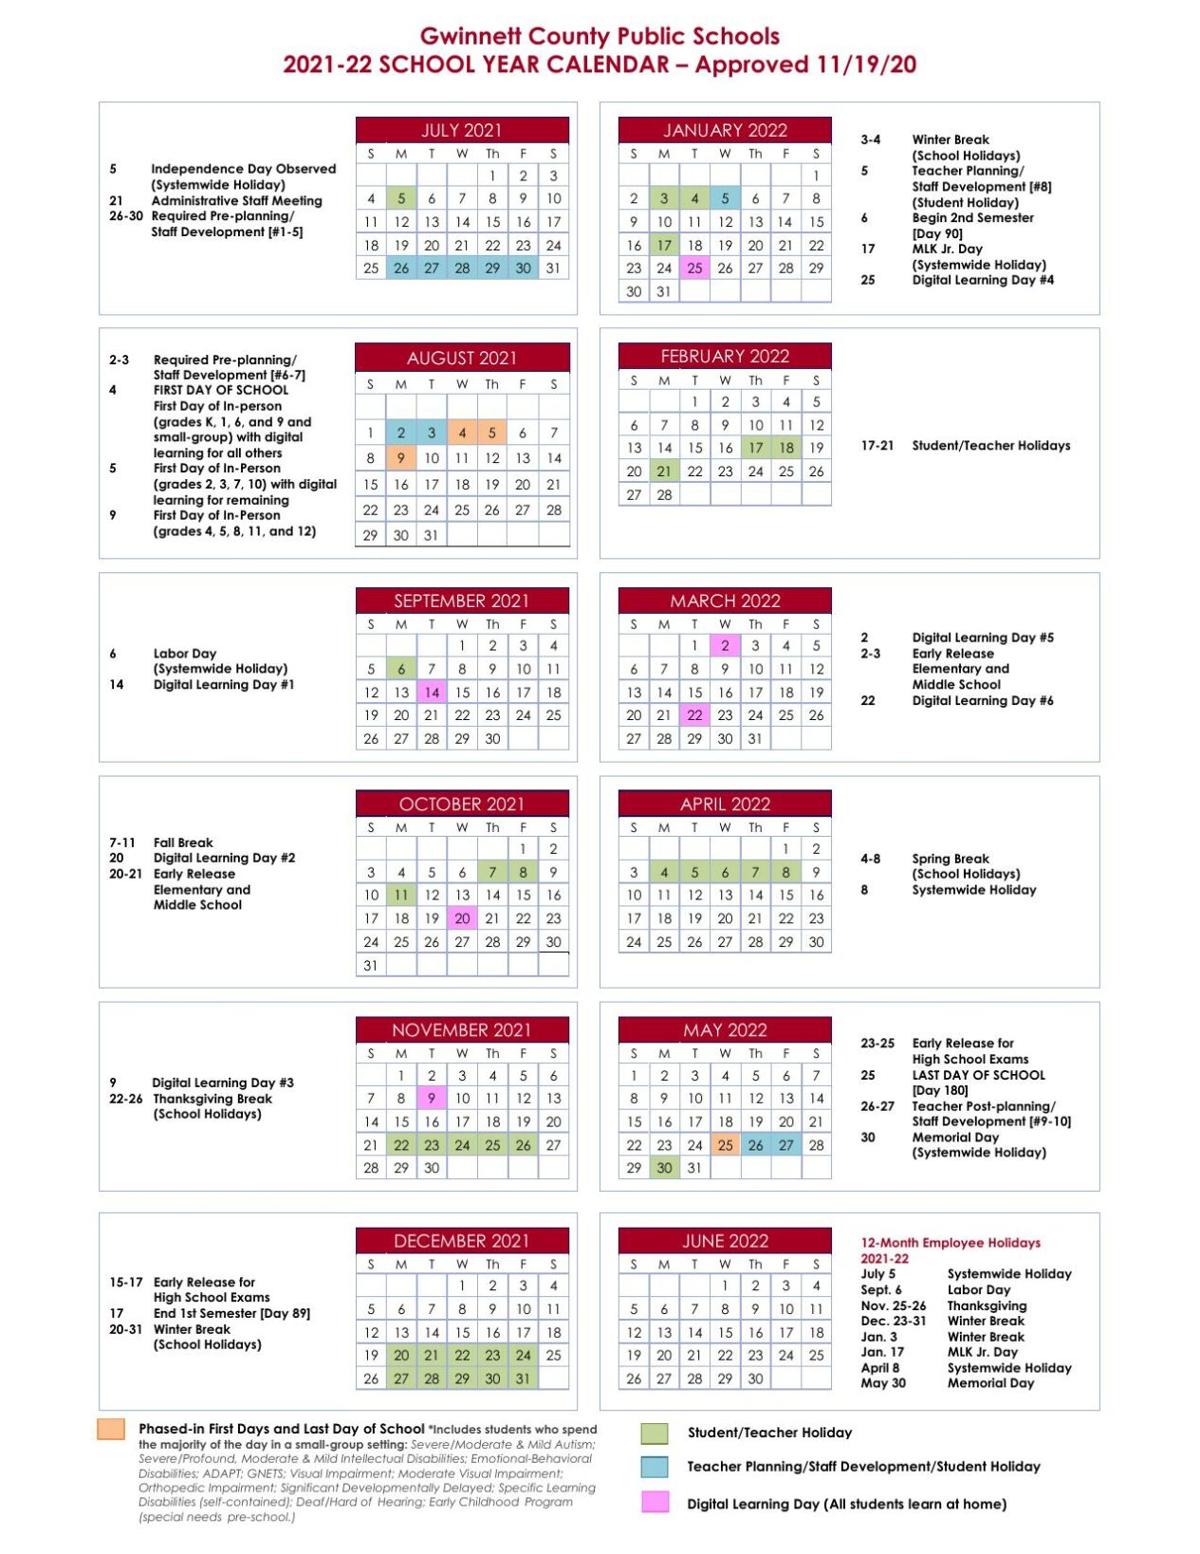 Mississippi State University Academic Calendar 2022 Gwinnett County Public Schools' 2021-2022 School Year Calendar | |  Gwinnettdailypost.com